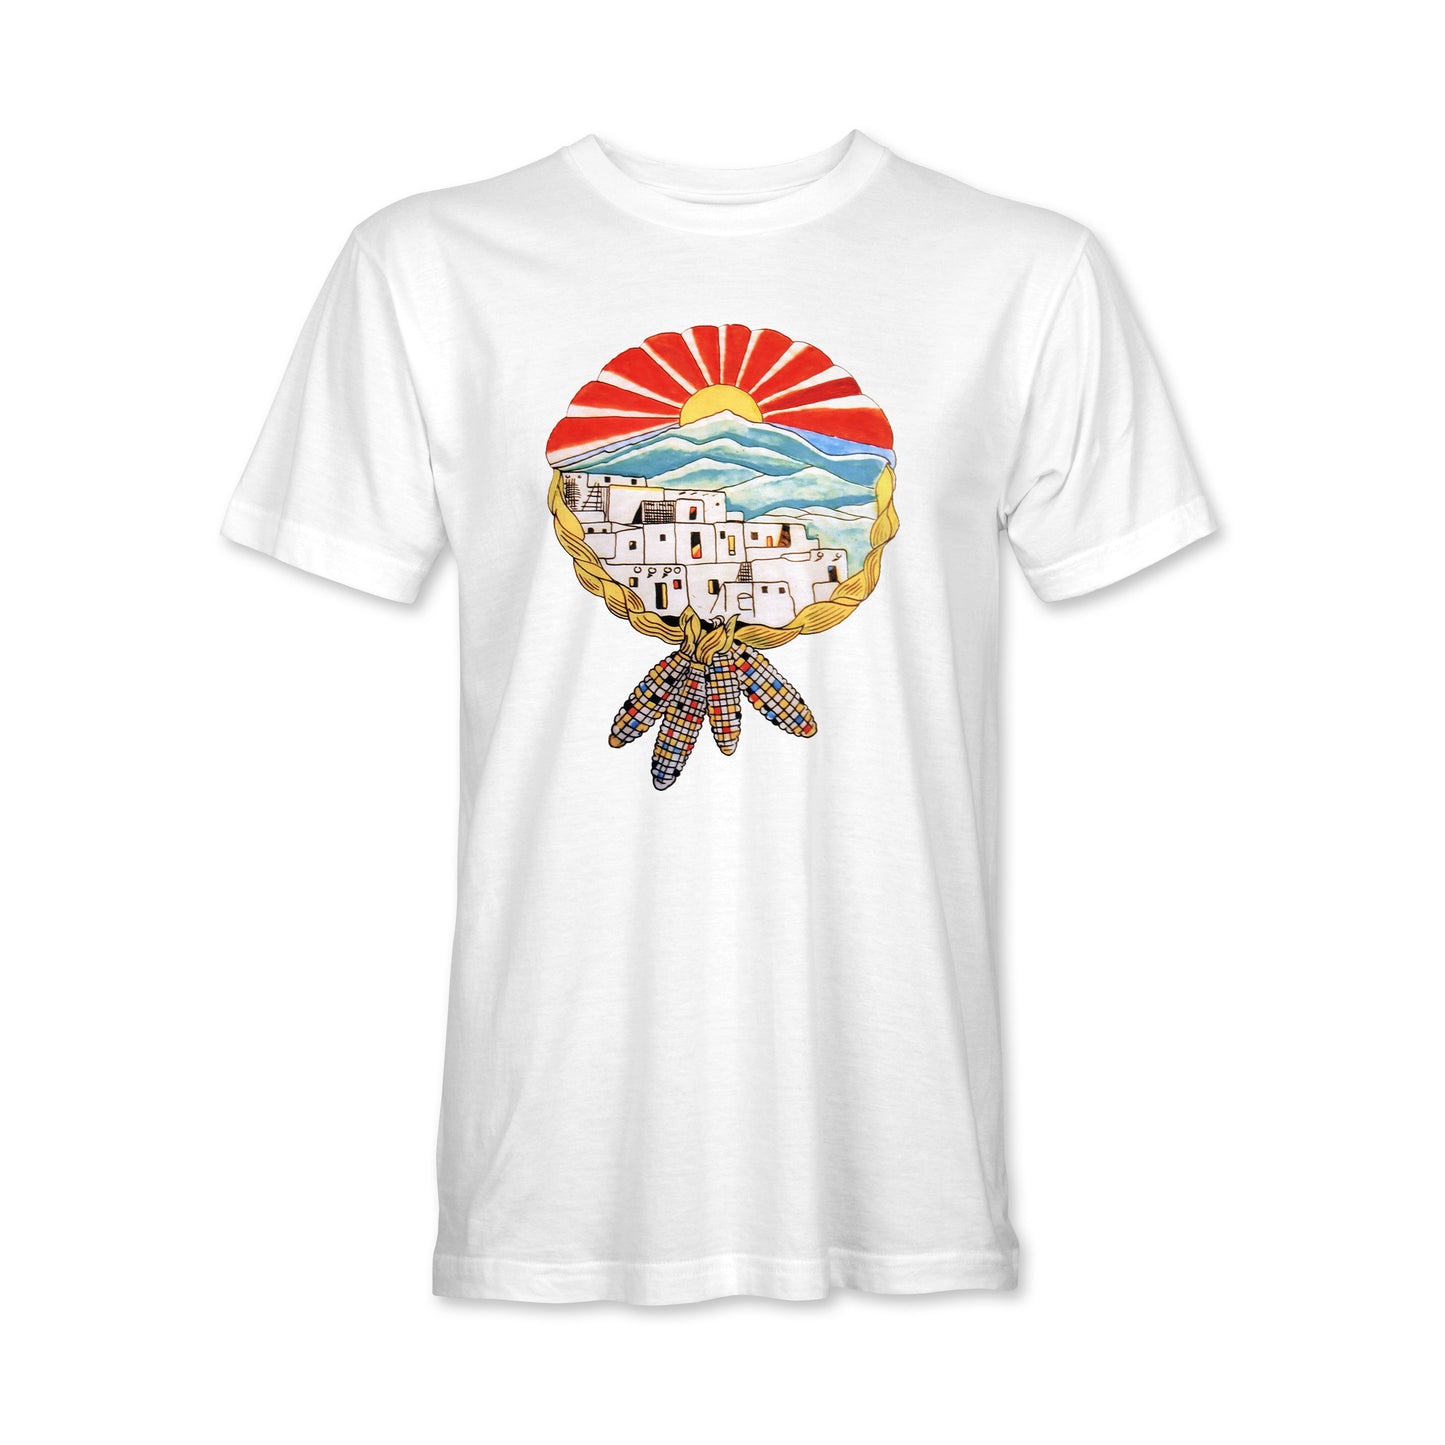 Minimum Wage Art Taos, New Mexico T-Shirt